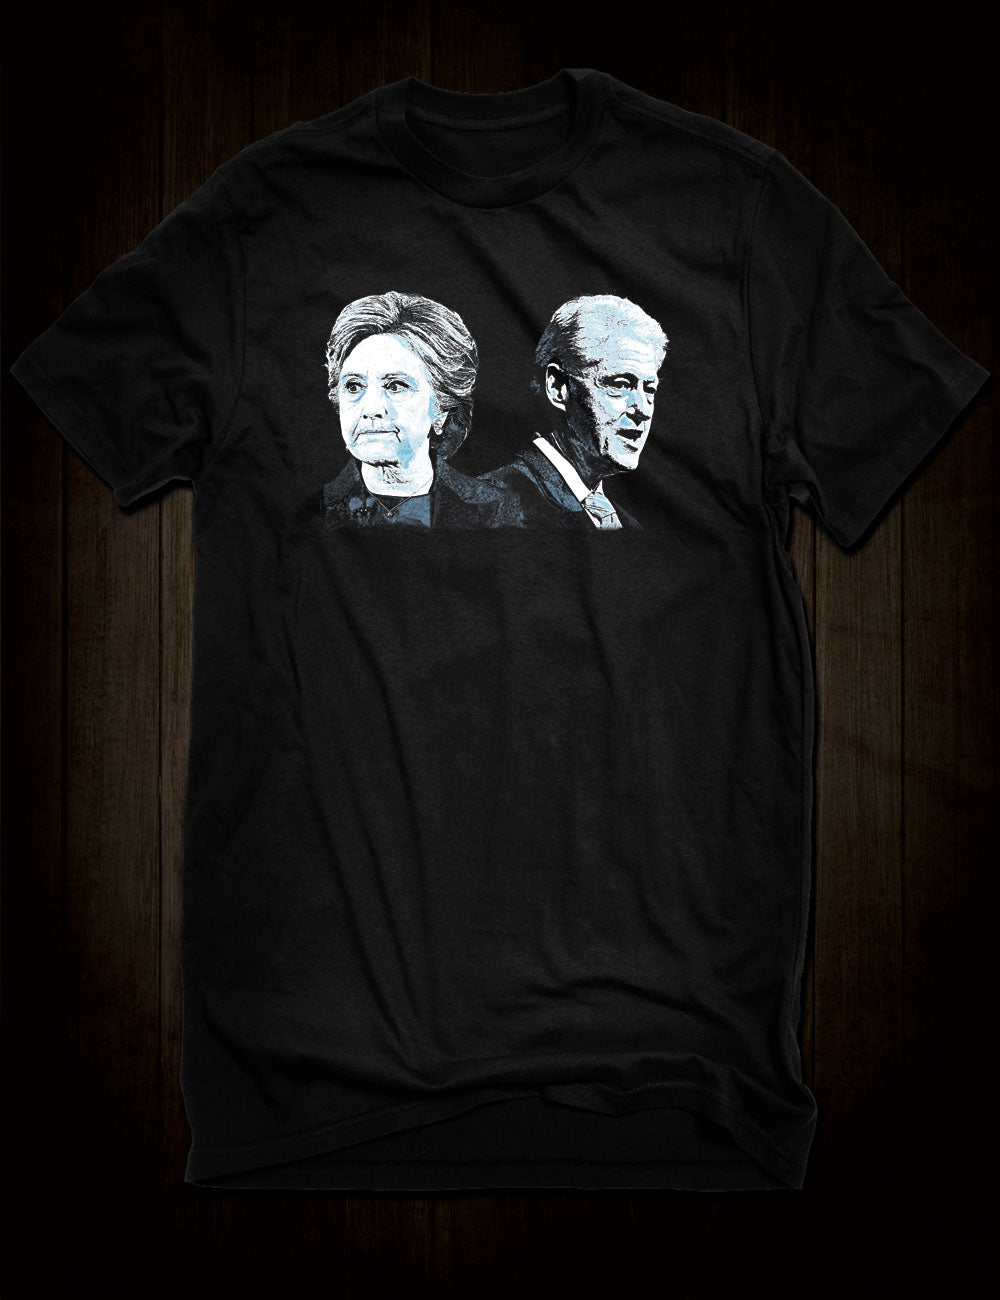 Clinton Body Count T-Shirt